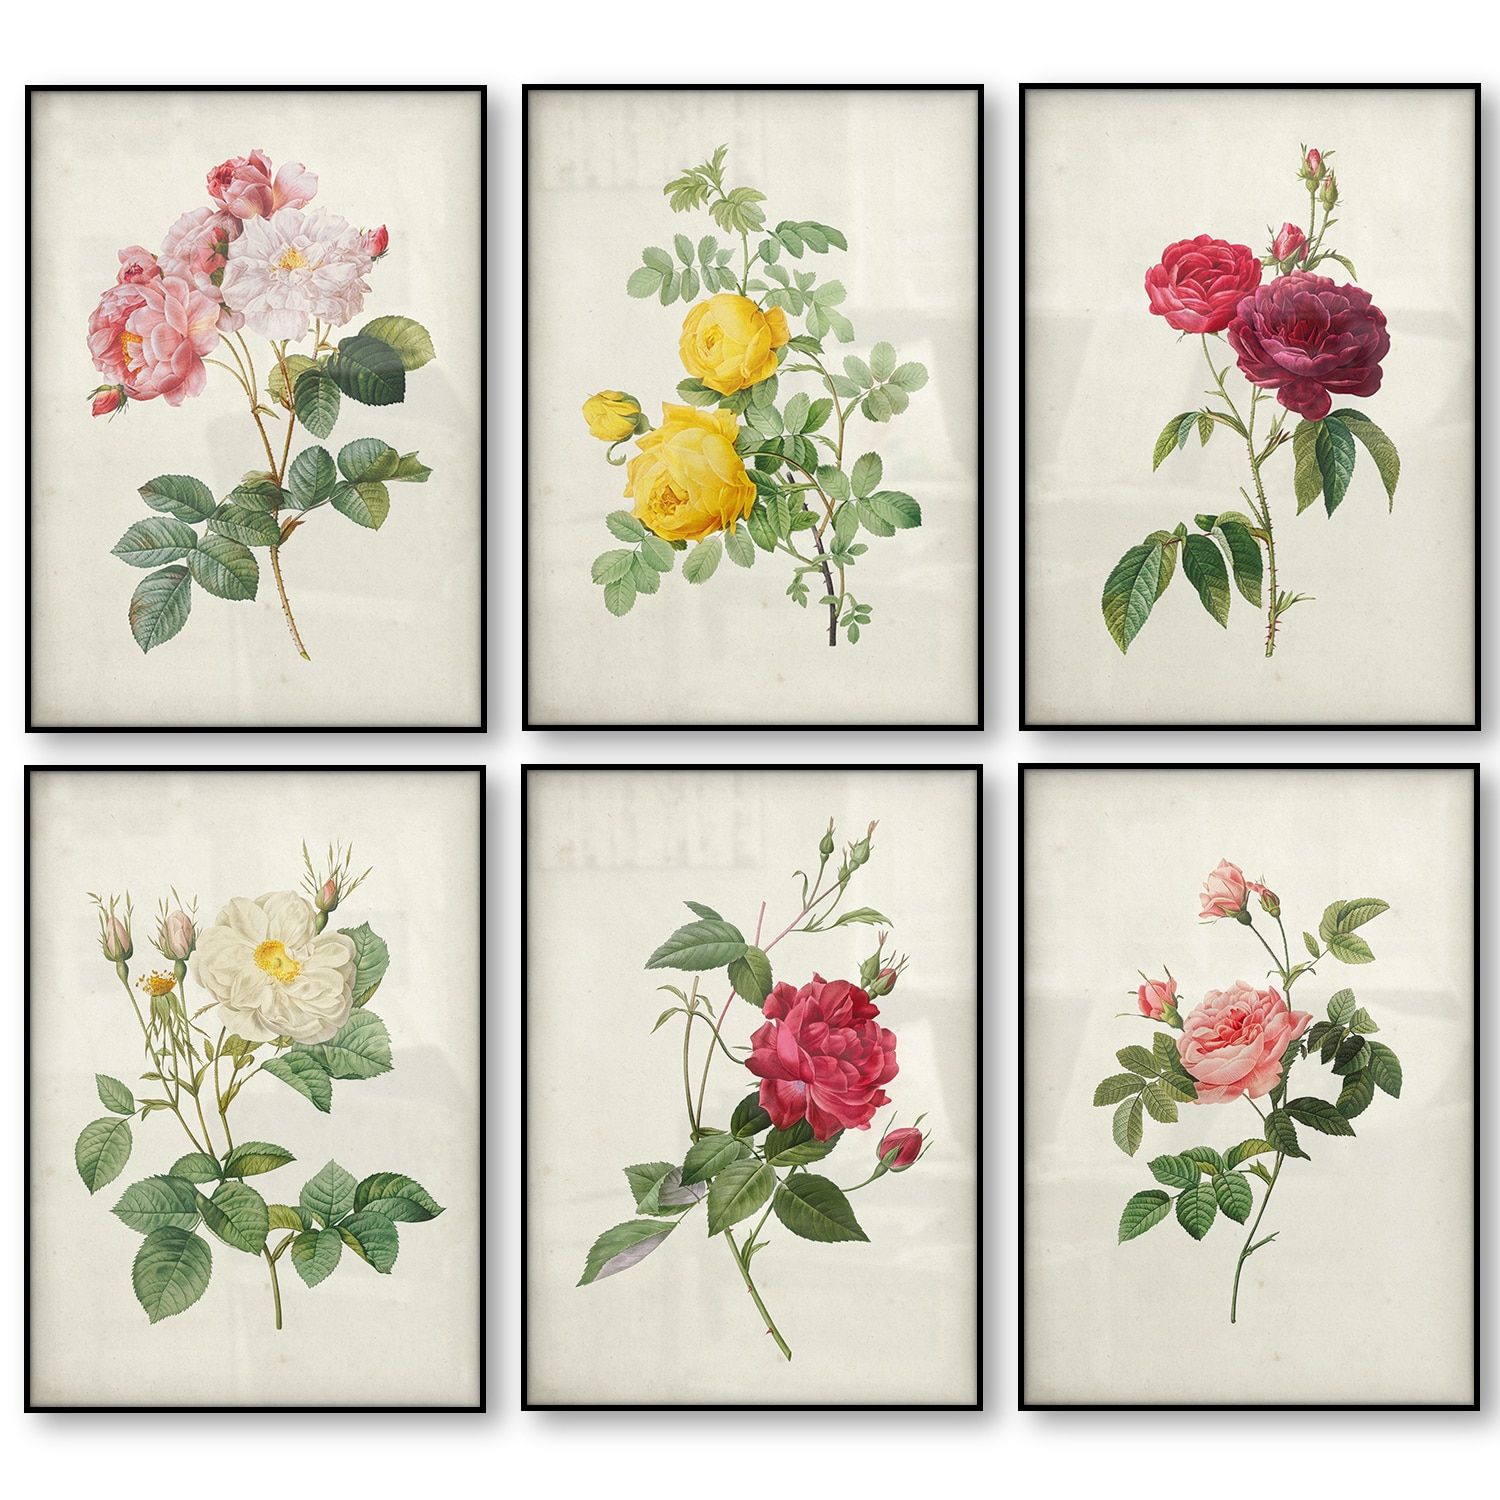 Vintage Art Digital Prints Vintage Roses Illustrations Printable Vintage Pink Roses Set of 3 set-4 Printable Wall Art